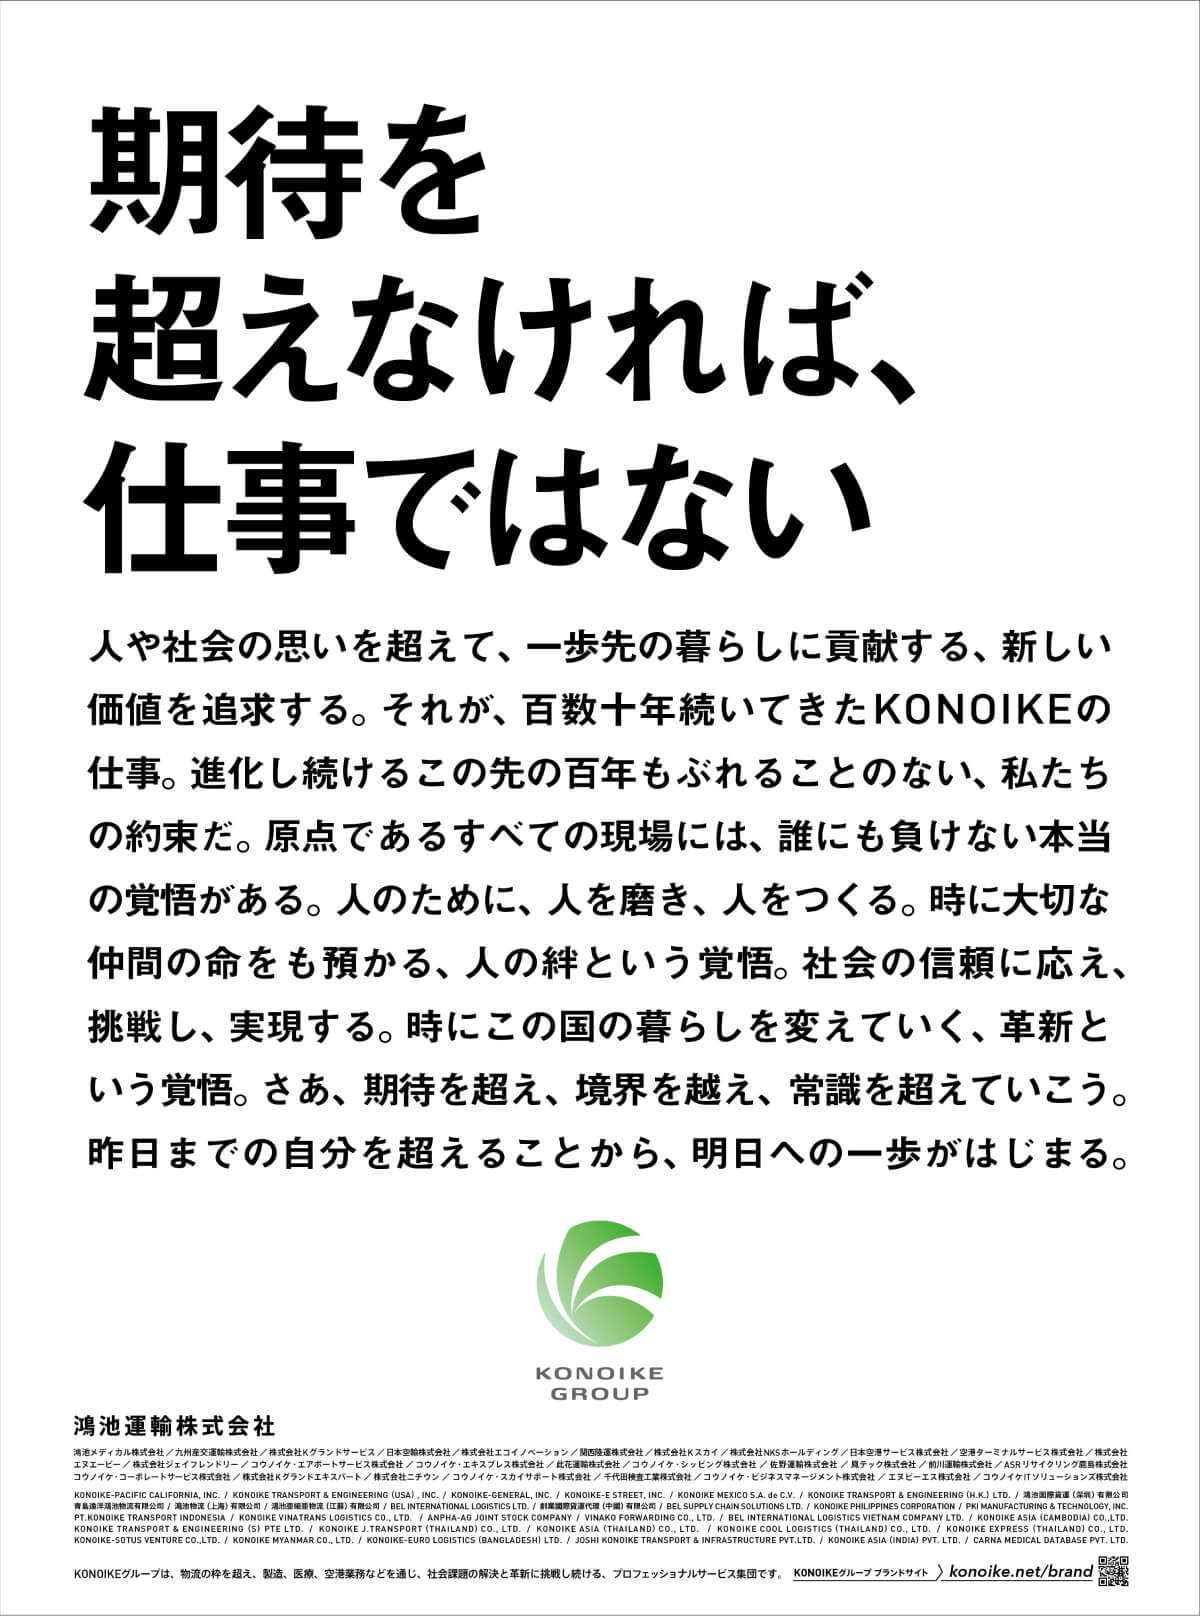 Yomiuri Shimbun newspaper, national edition, full-page ad